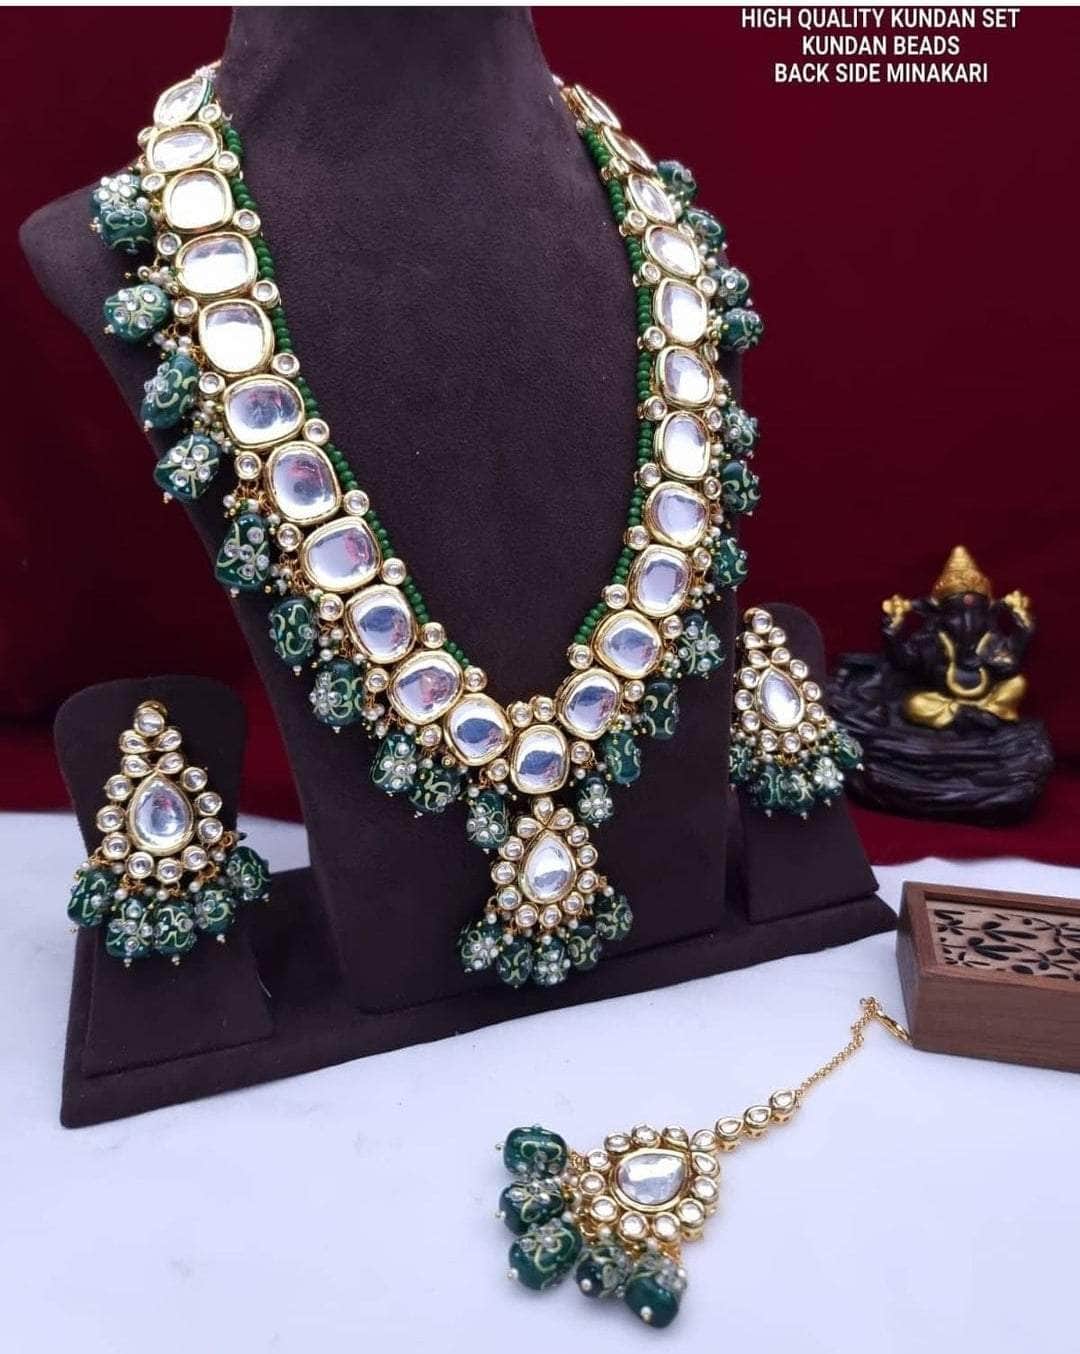 Zevar Bridal necklace A Beautifull High Quality Kundan Semi Bridal WIth Minakari Set By Zevar.